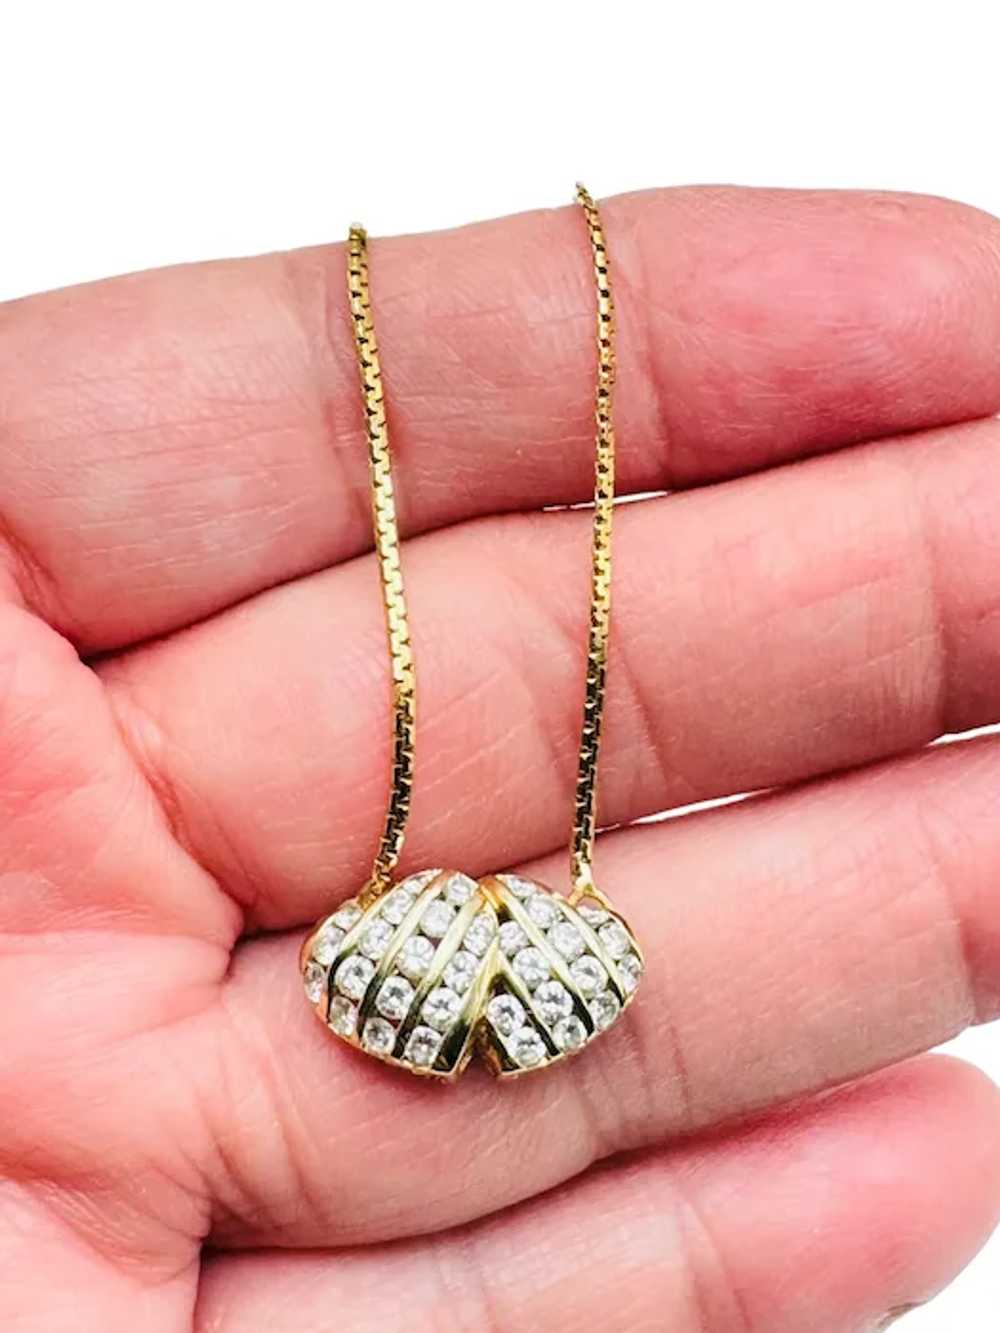 UNOAERRE 14k Solid Gold Necklace Chain + 14k Diam… - image 11